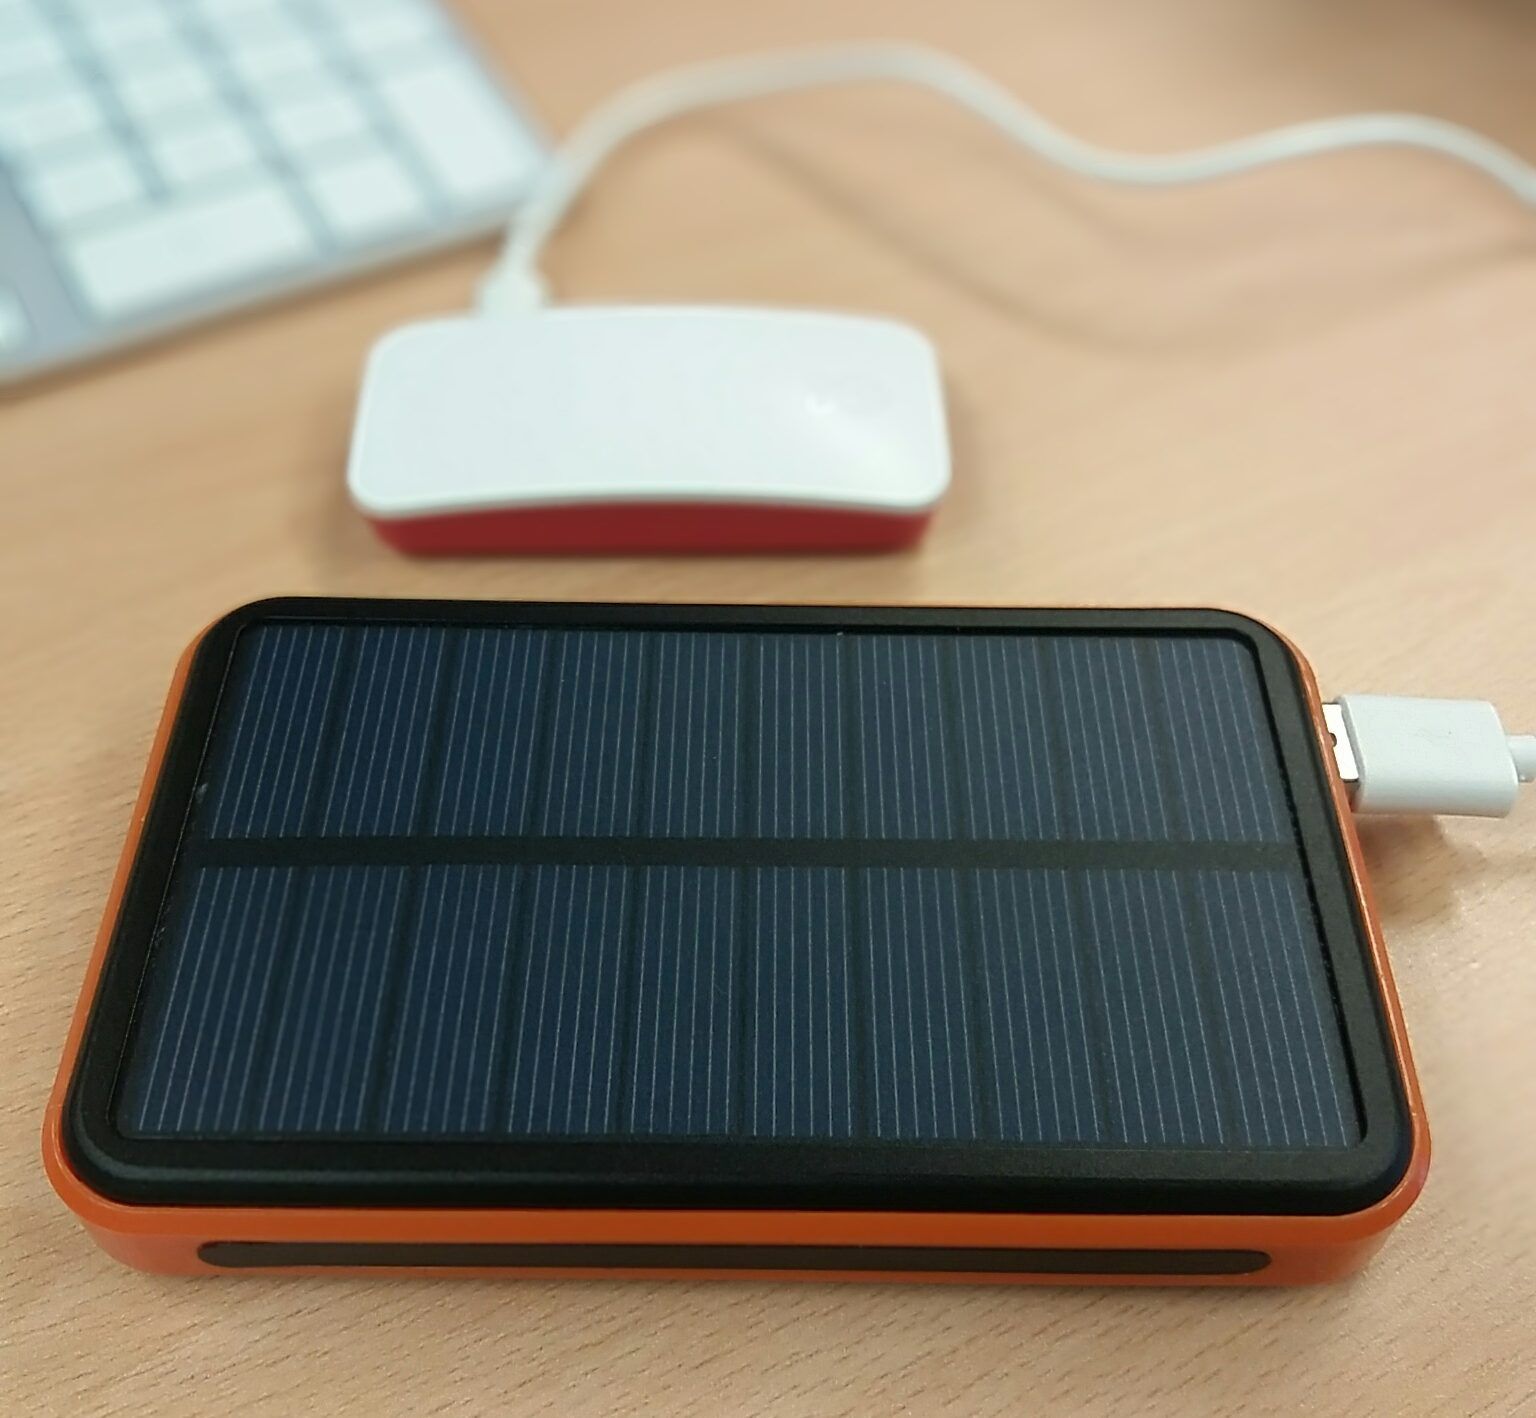 Create a portable battery and solar powered Raspberry Pi Zero web server